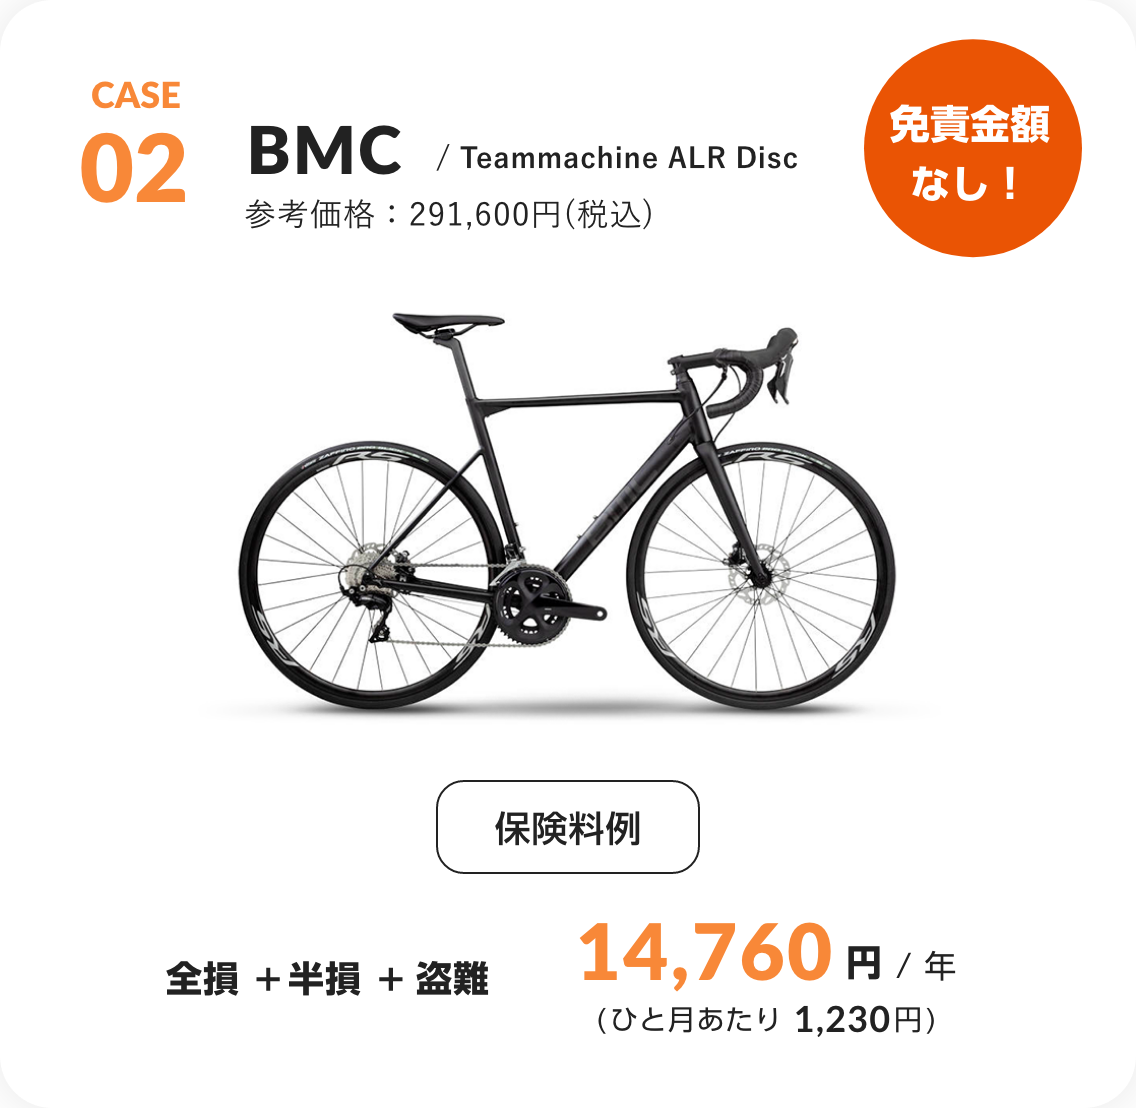 CASE02 BMC/Teammachine ALR Disc 全損+半損+盗難 1ヶ月あたり1,230円